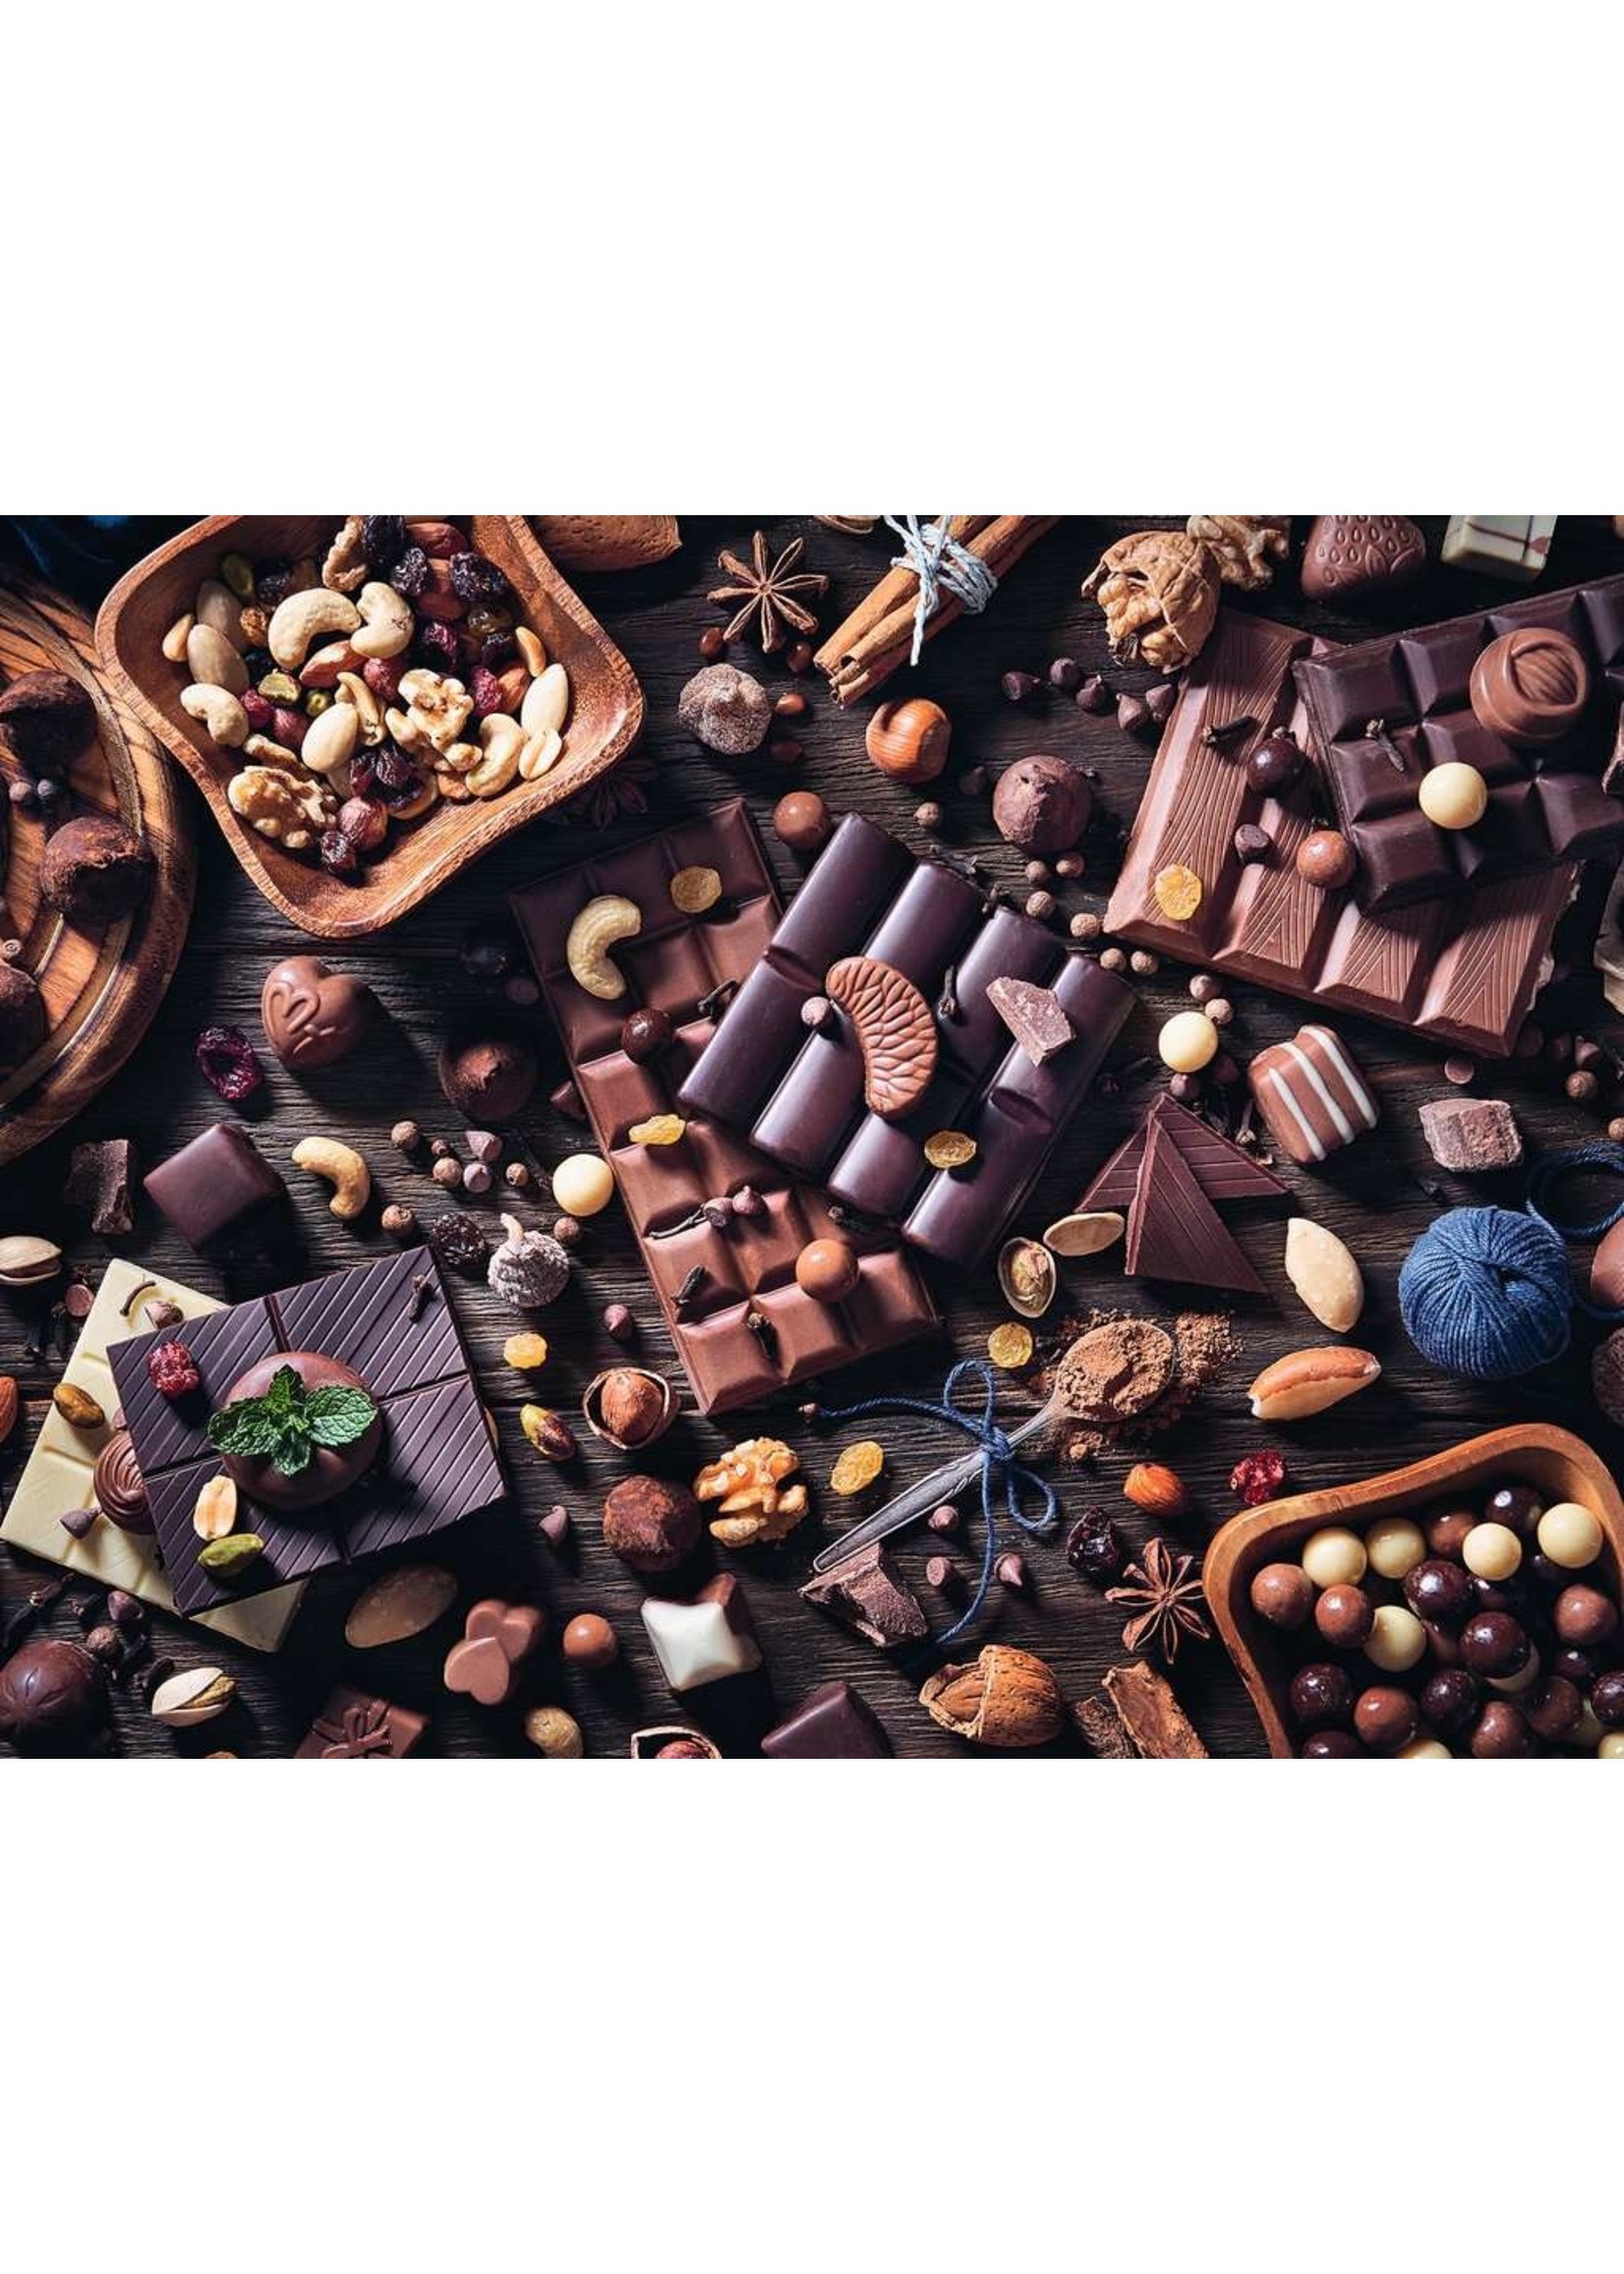 Ravensburger Chocolate Paradise - 2000 Piece Puzzle